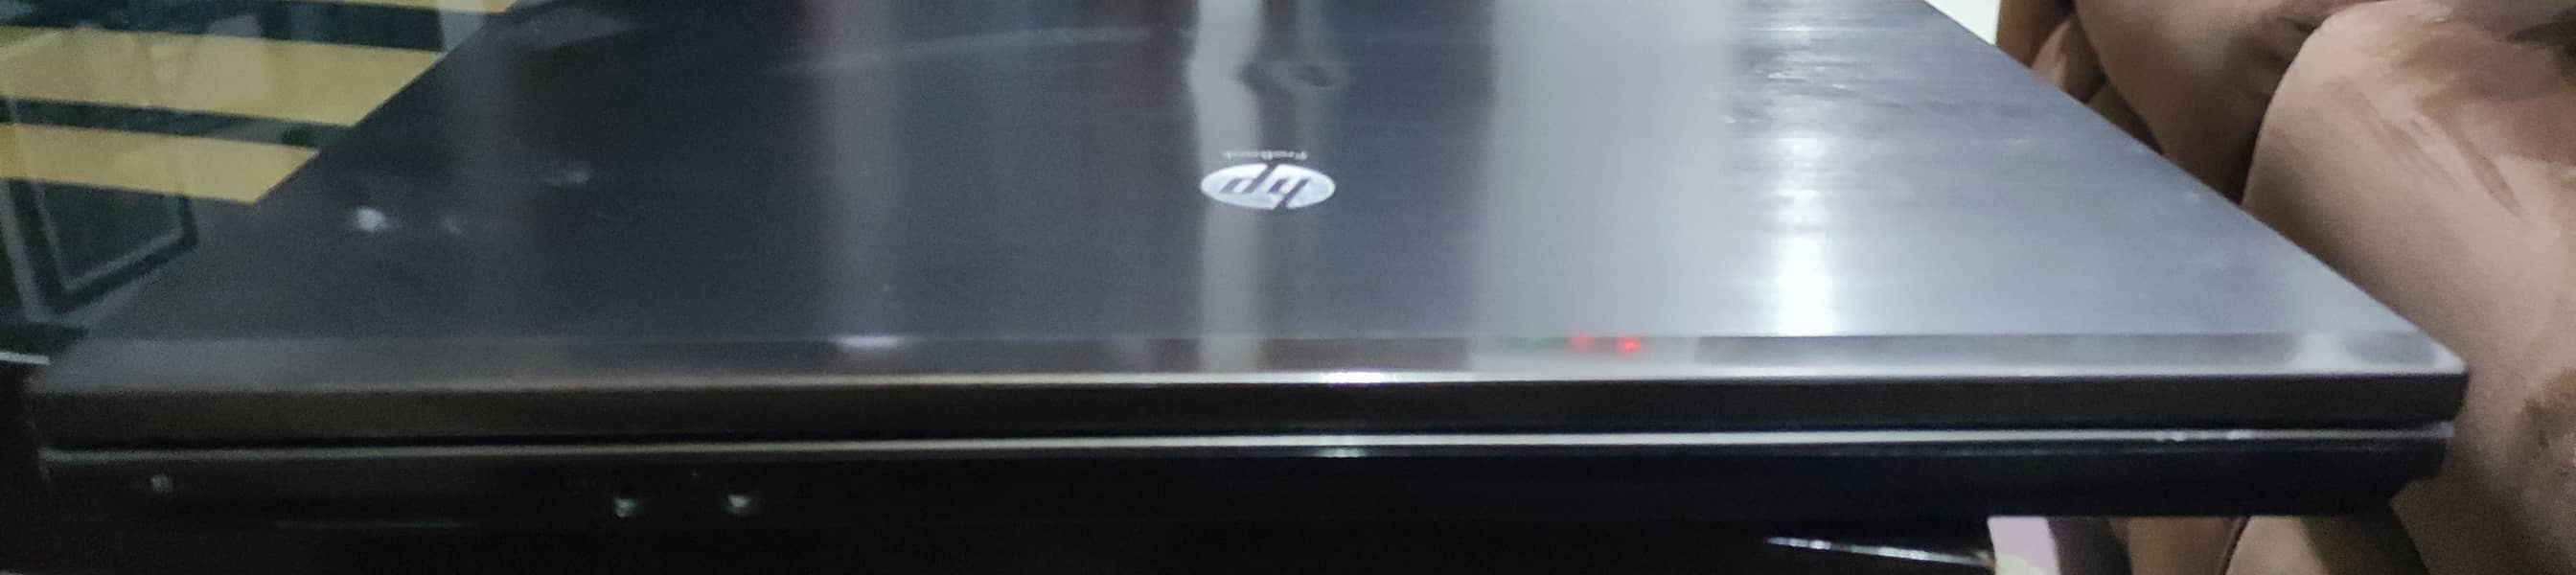 HP laptop 4520s 2